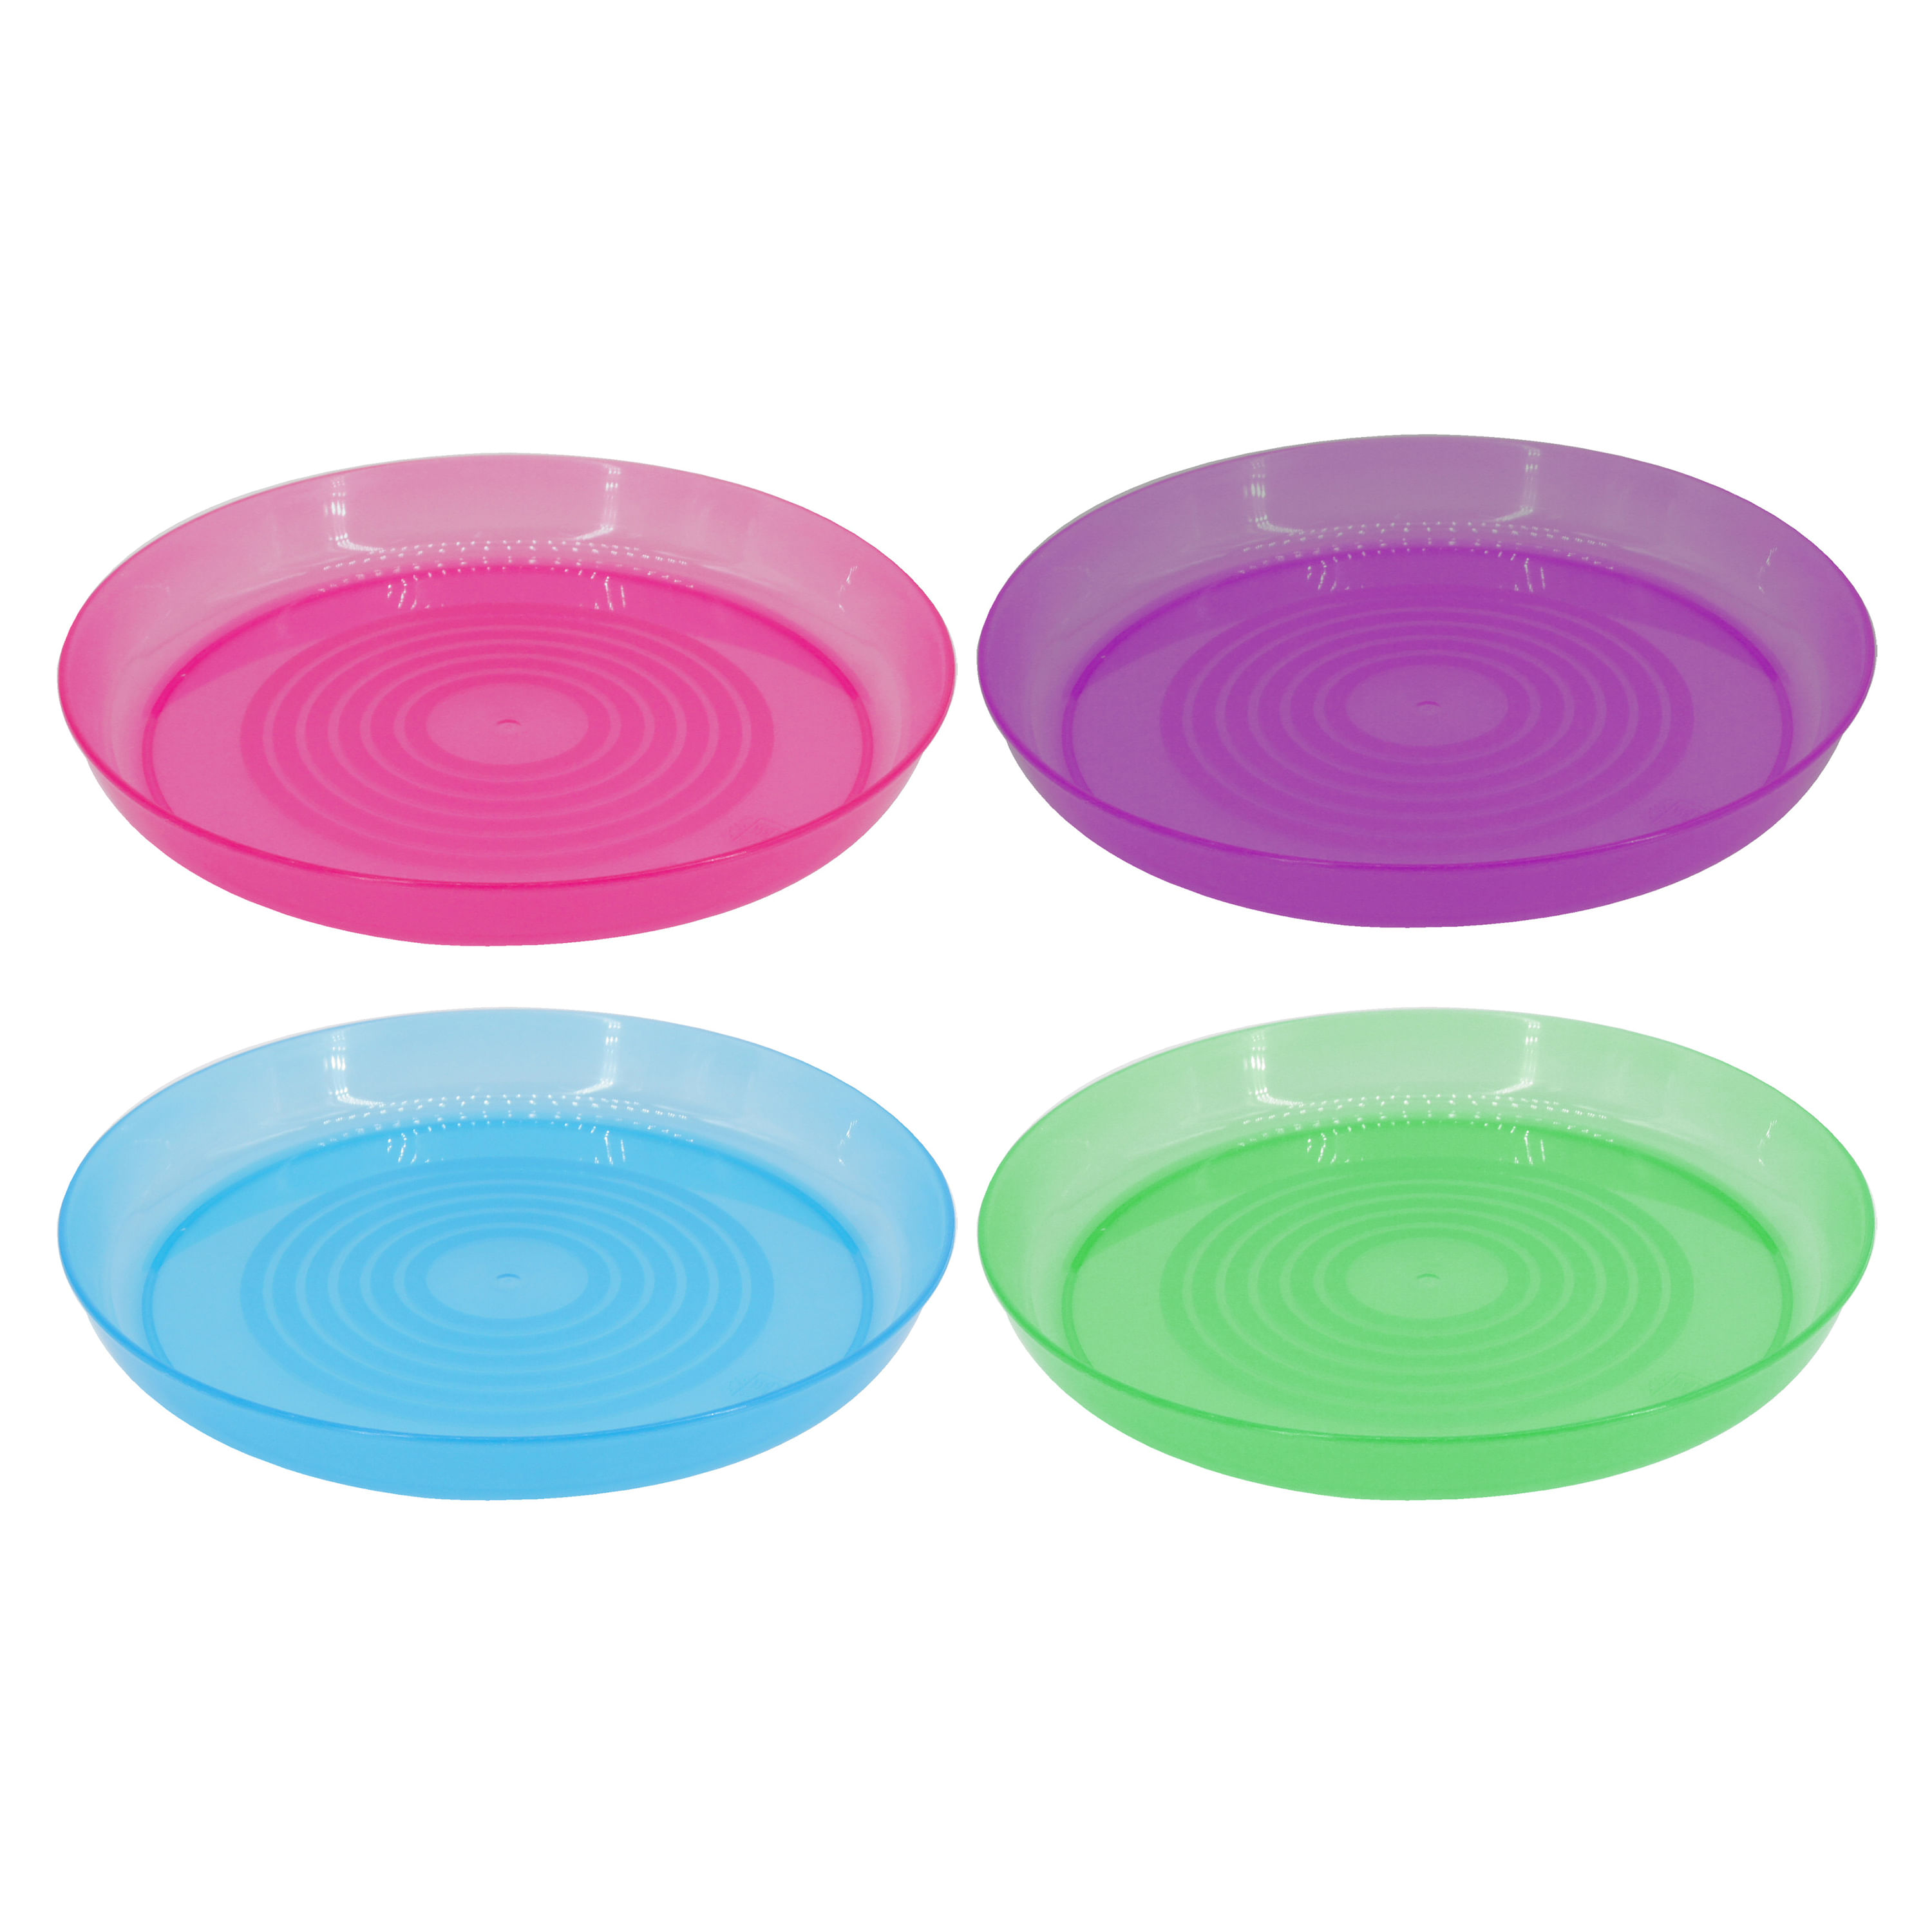 EckoHogar - Set de porta platos decorativos plásticos